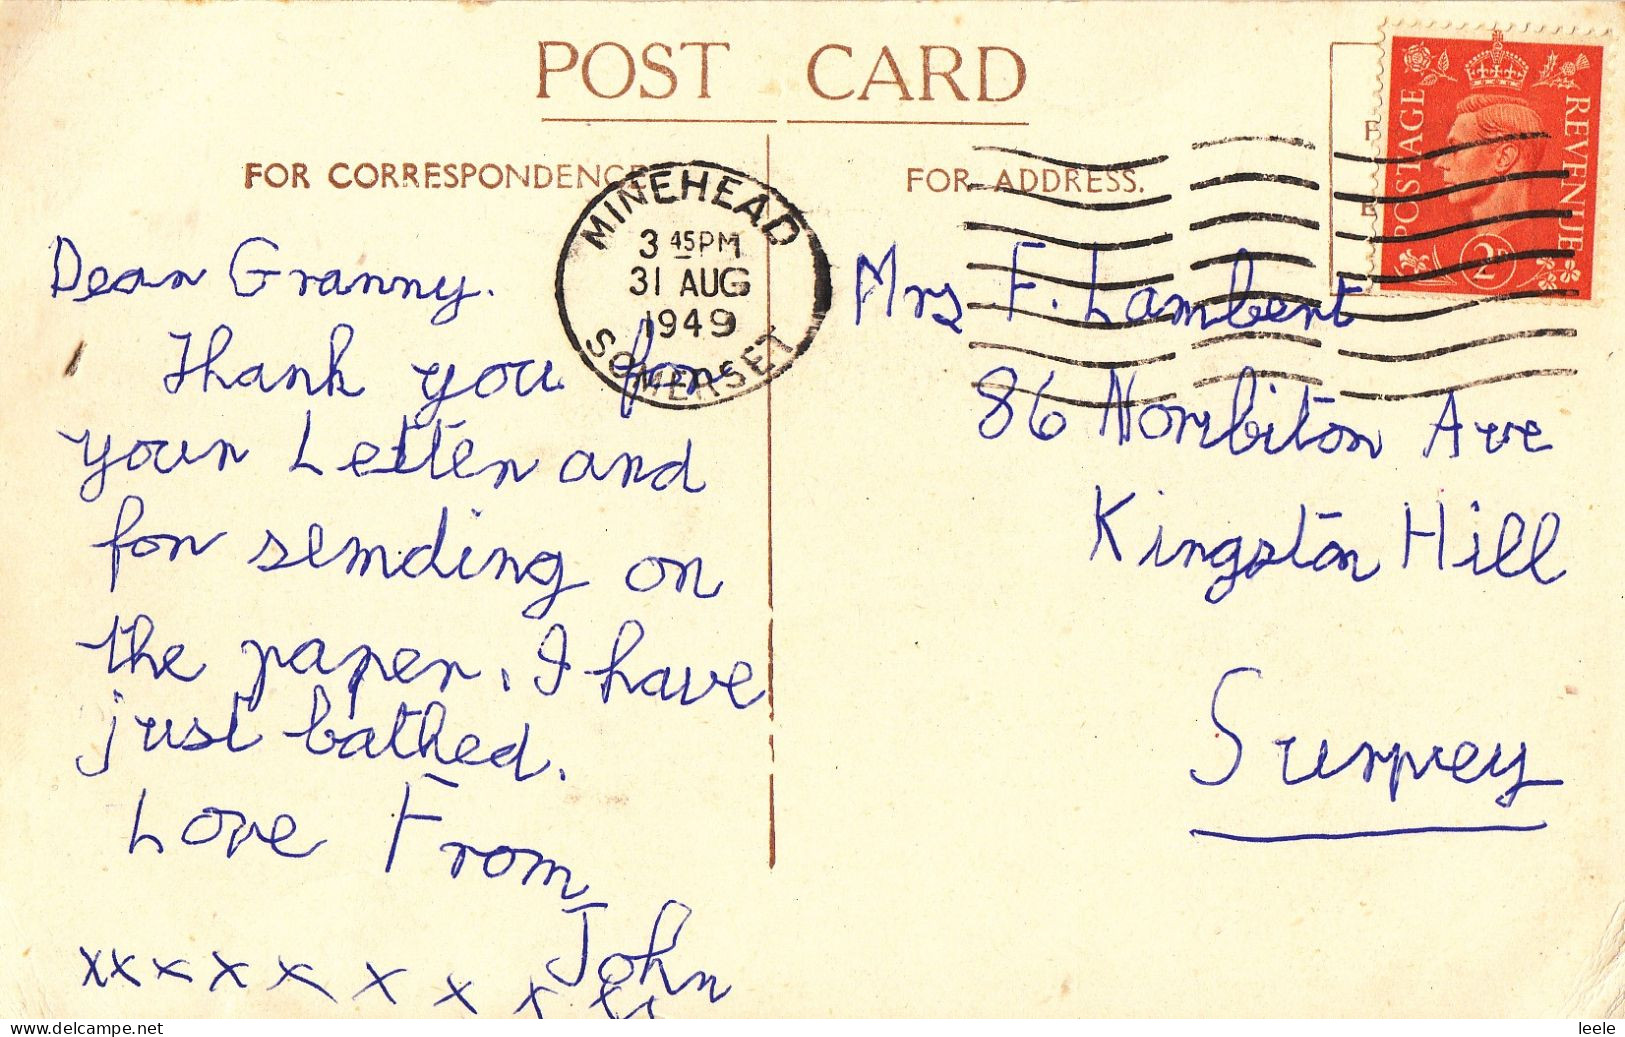 E69. Vintage Multiview Postcard. Minehead District. Somerset - Minehead